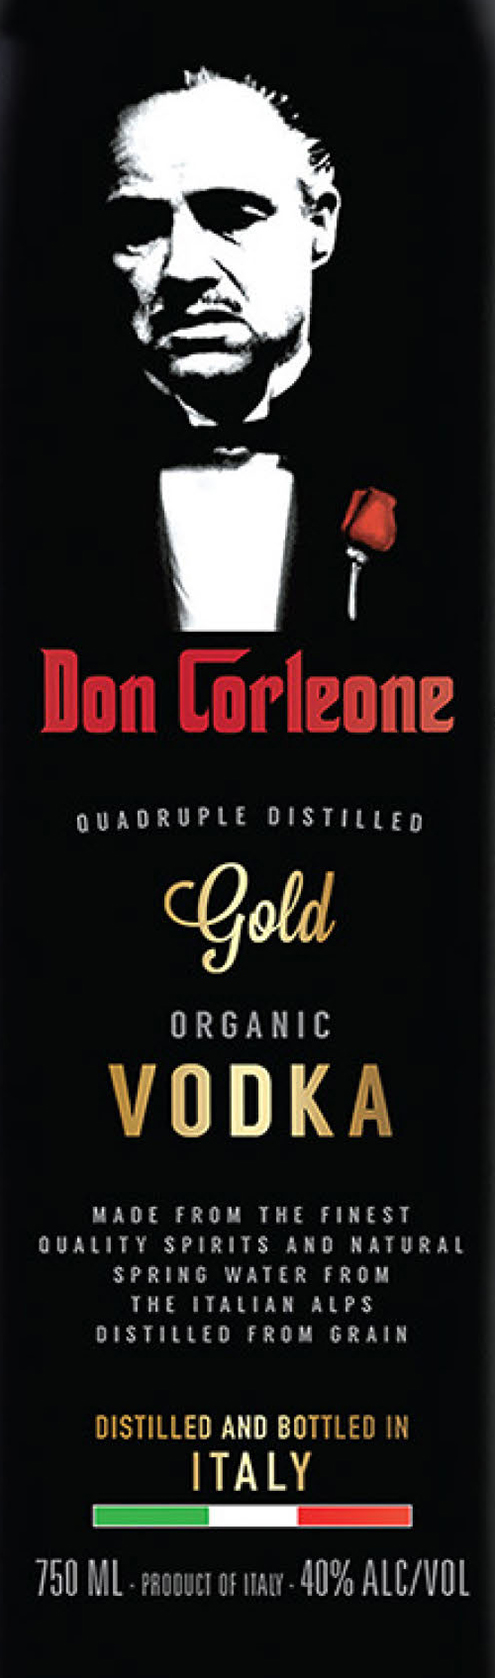 Don-Corleone-MBJ-Ad.jpg